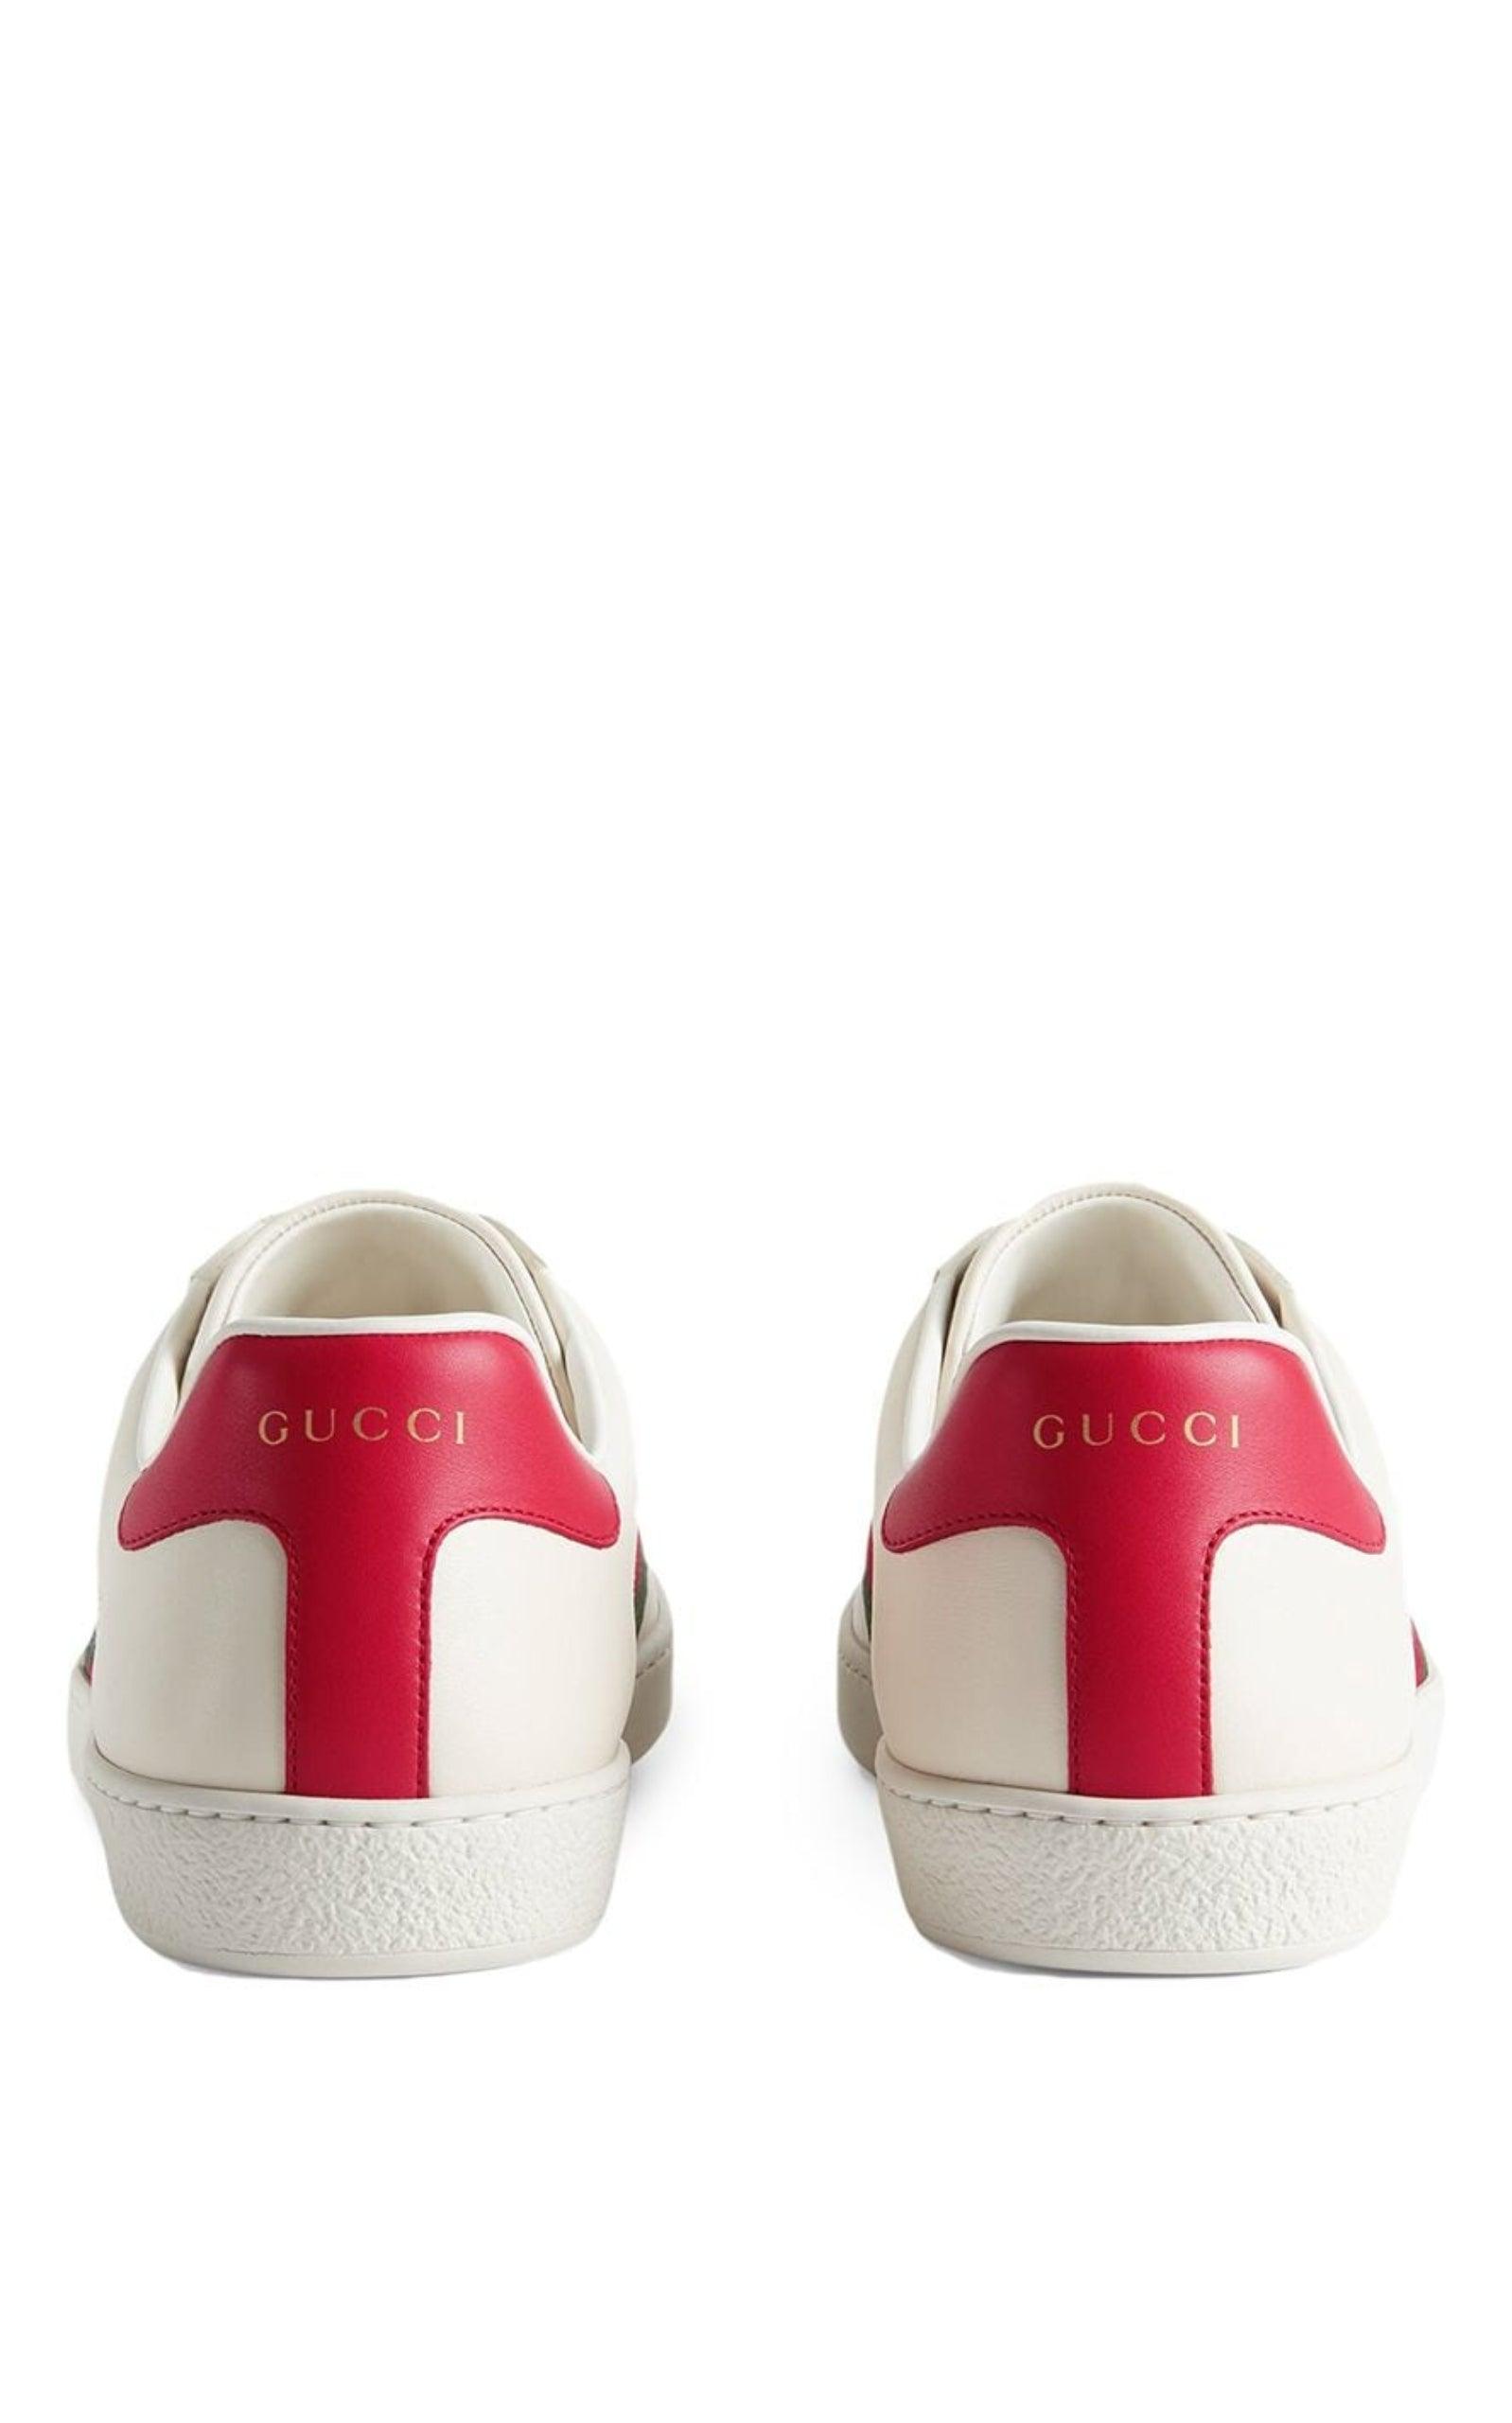  GucciFreya Hartas Ace Leather Sneakers - Runway Catalog